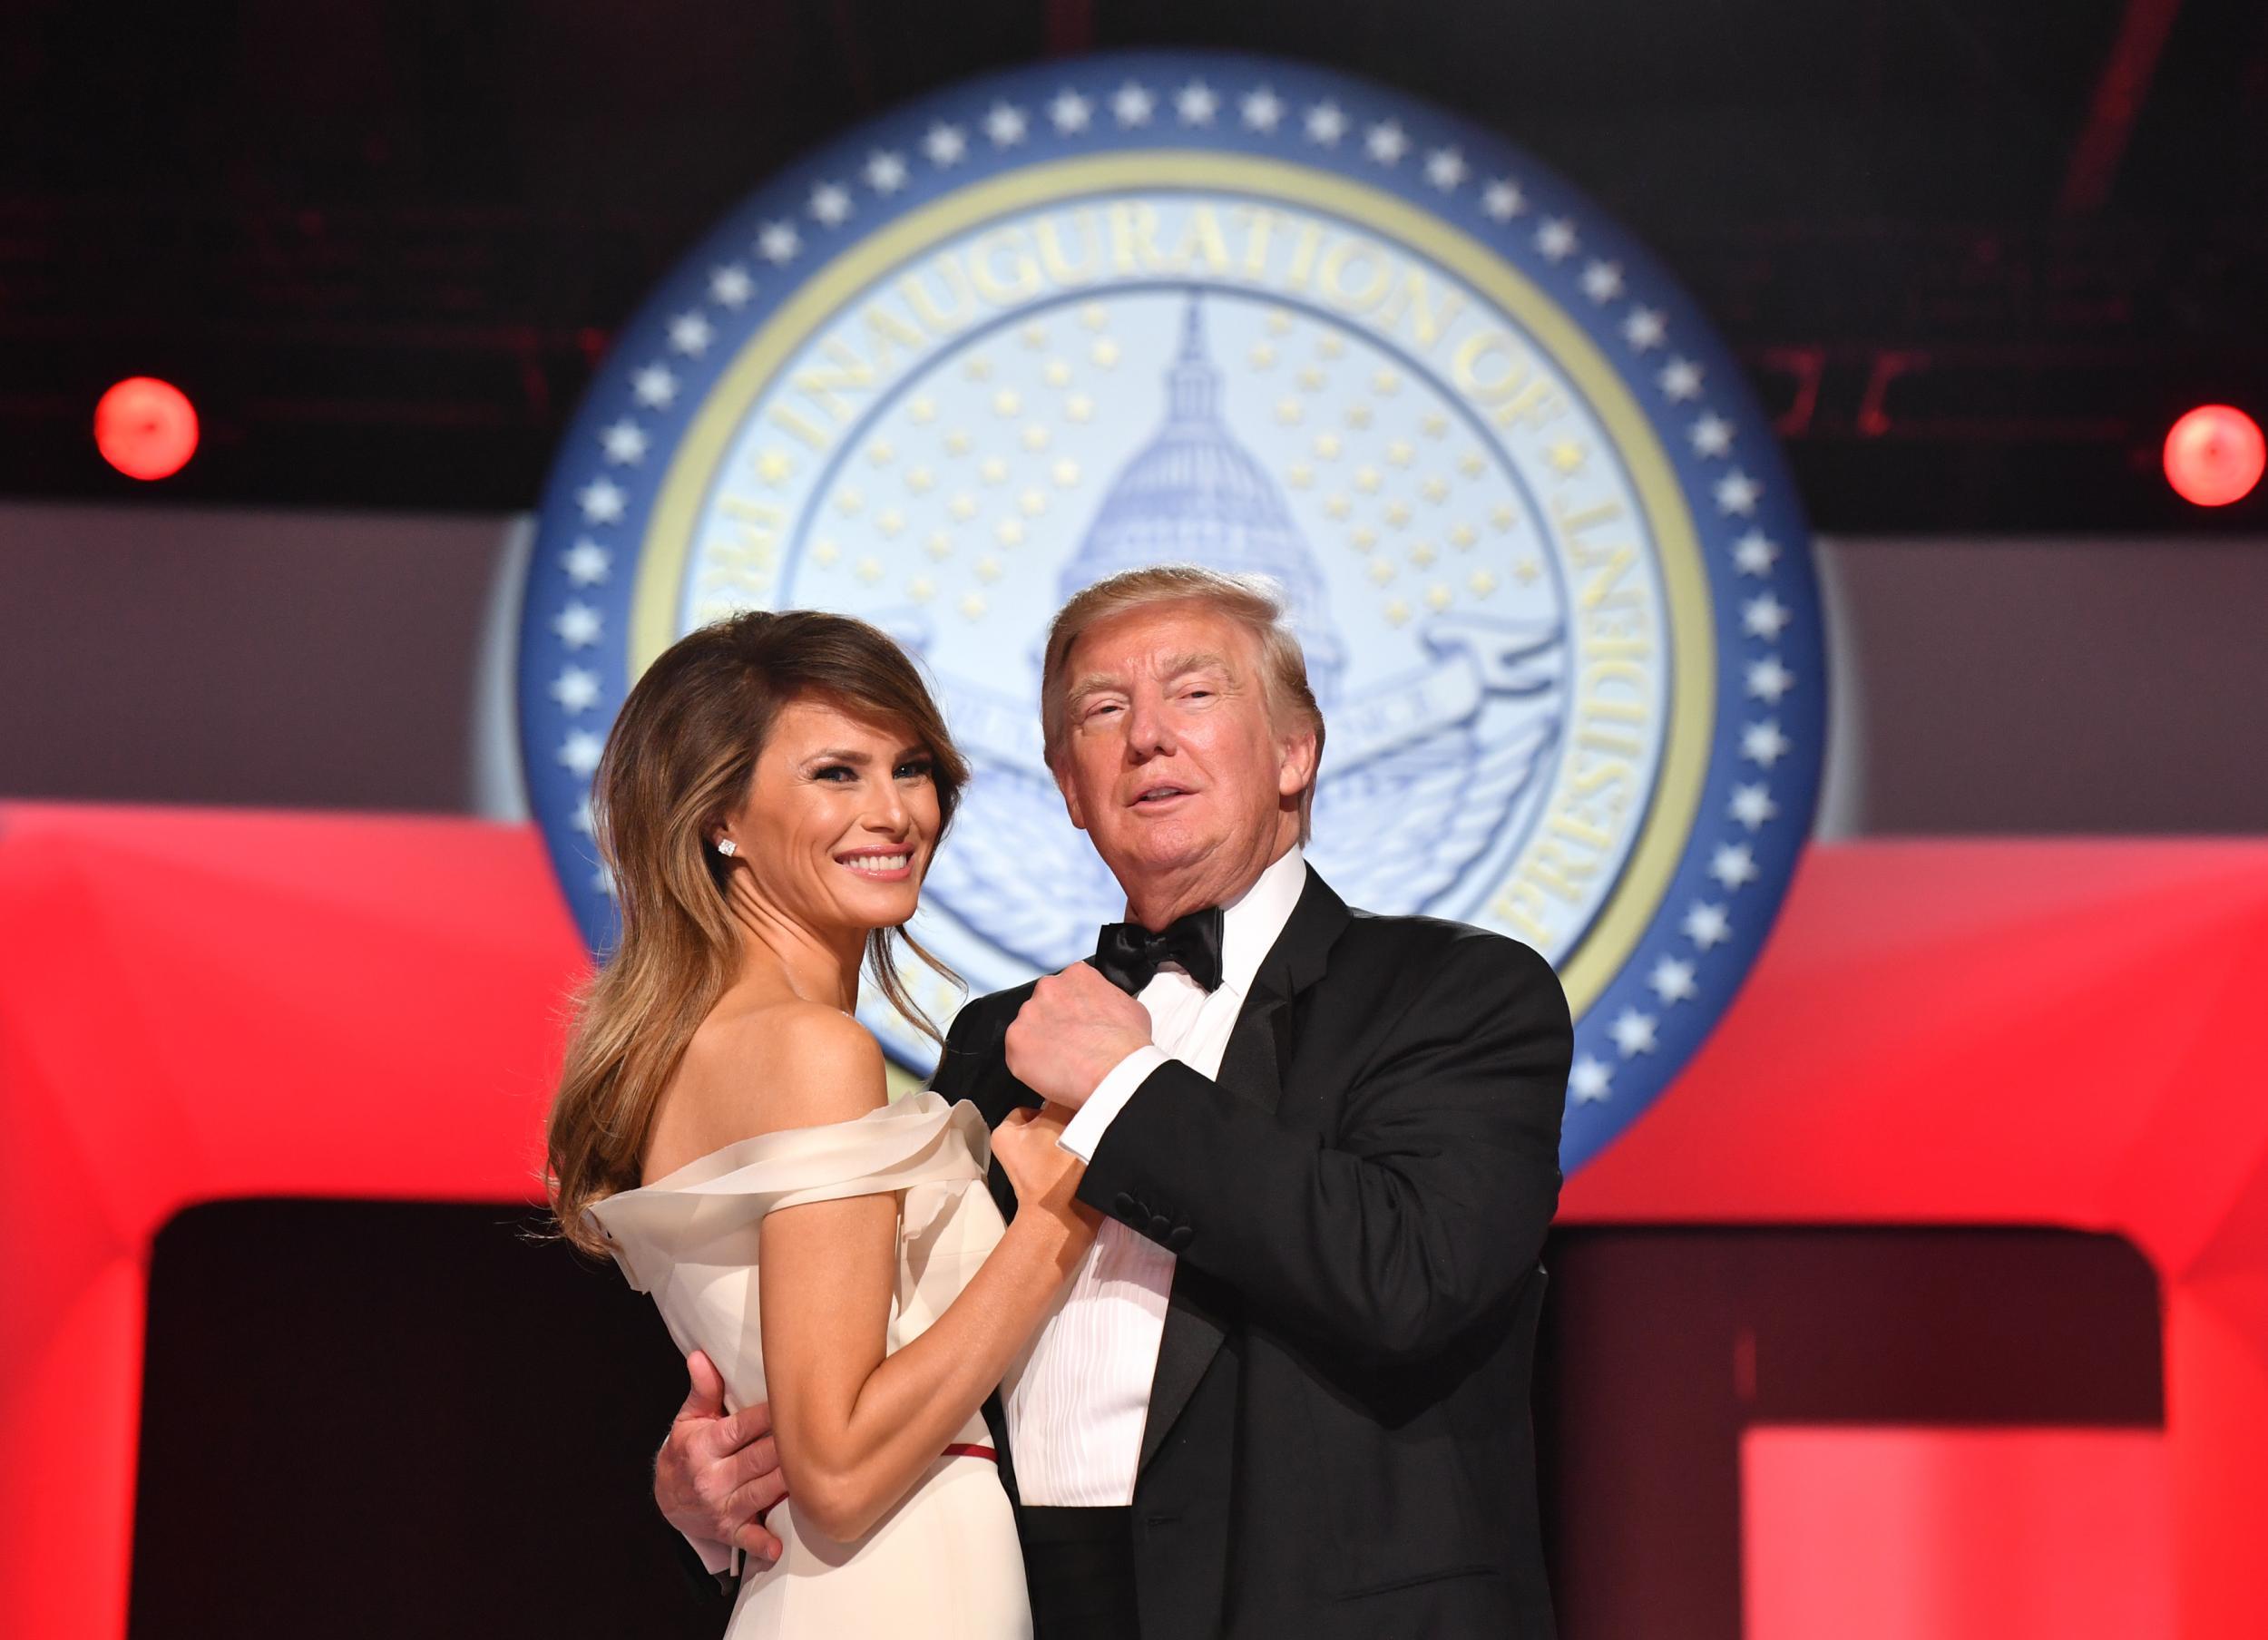 Donald and Melania Trump at their costly and disorganised inaugural ball